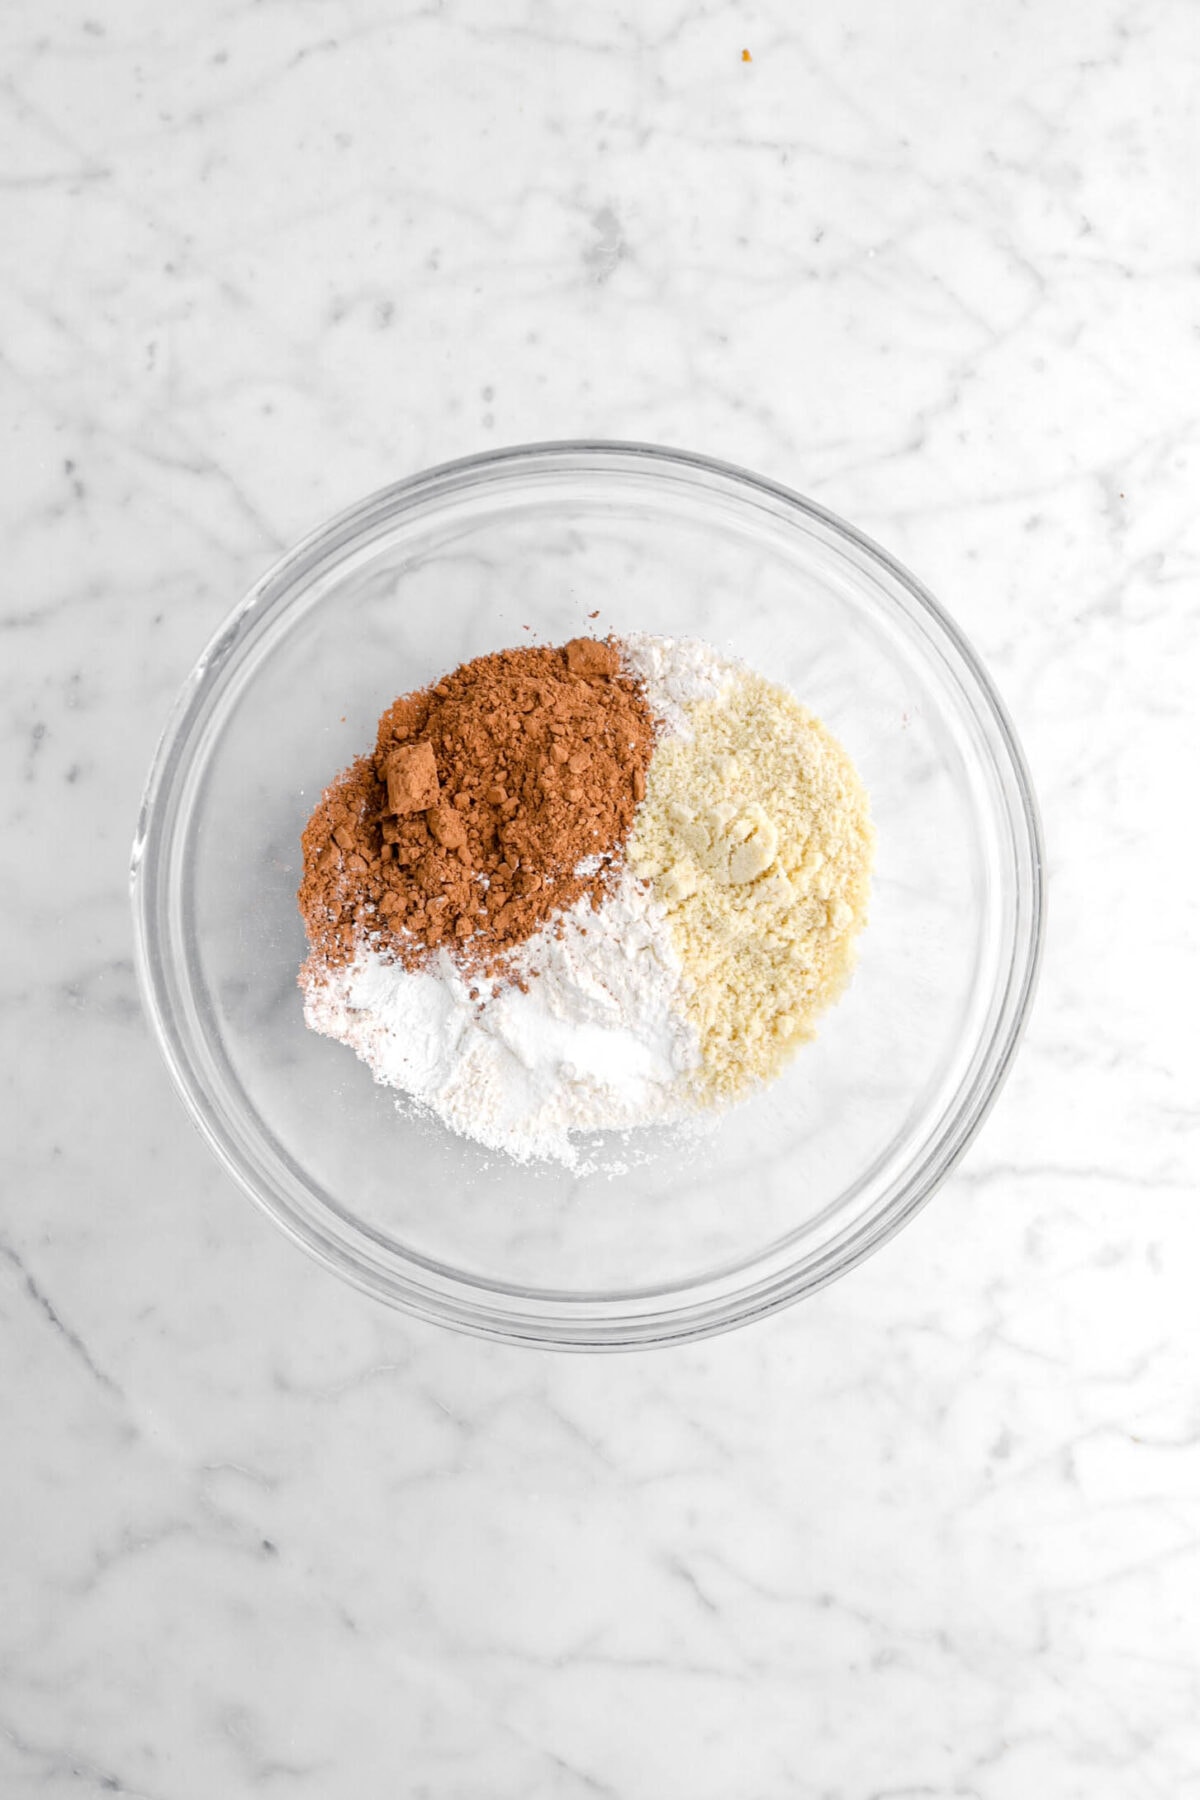 cocoa powder, almond flour, flour, baking powder, and salt on marble surface